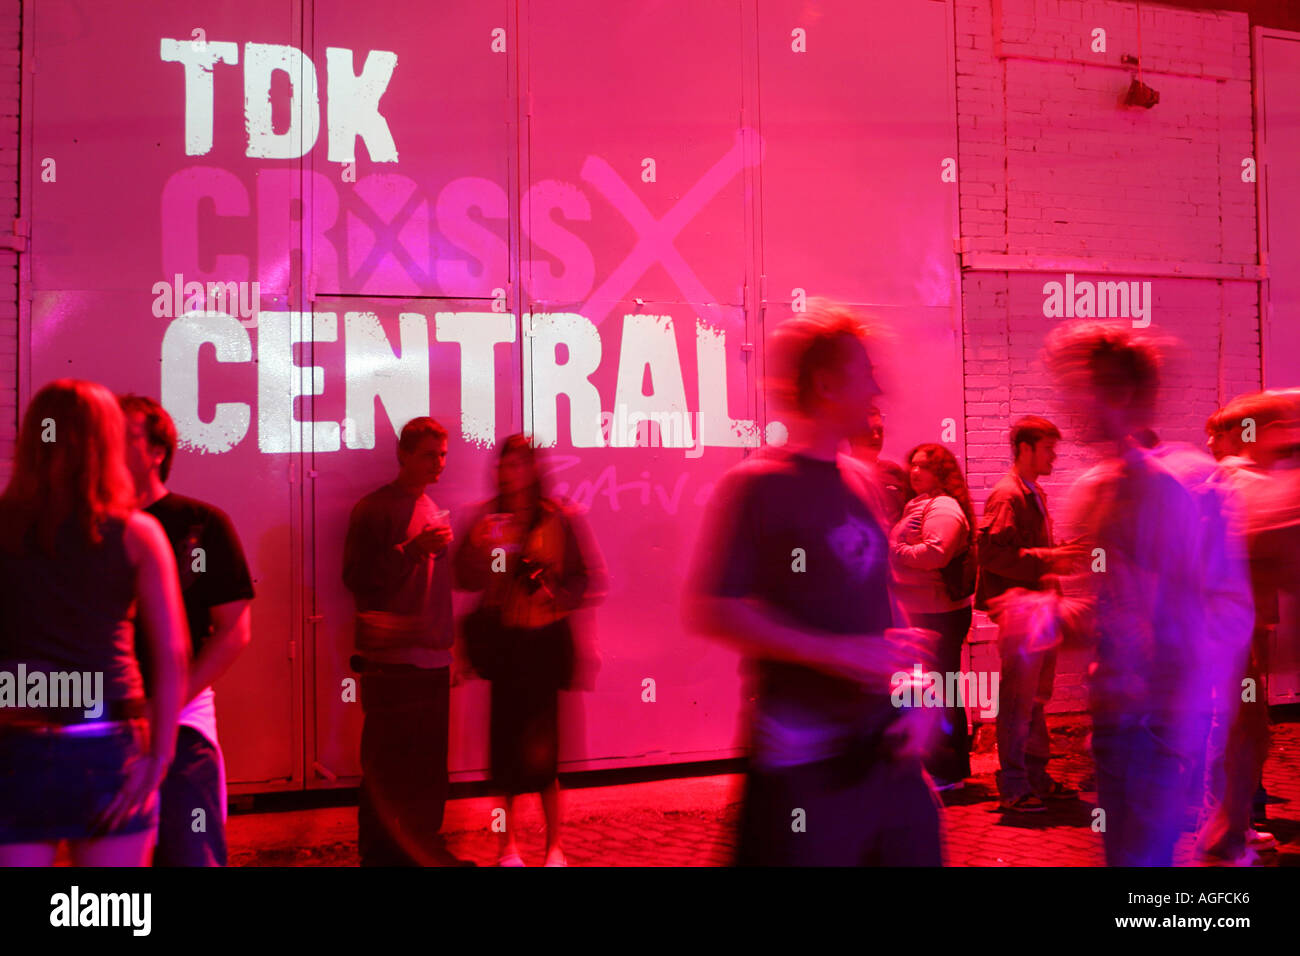 Sporgenze in corrispondenza delle TDK Cross Central Festival Londra Foto Stock